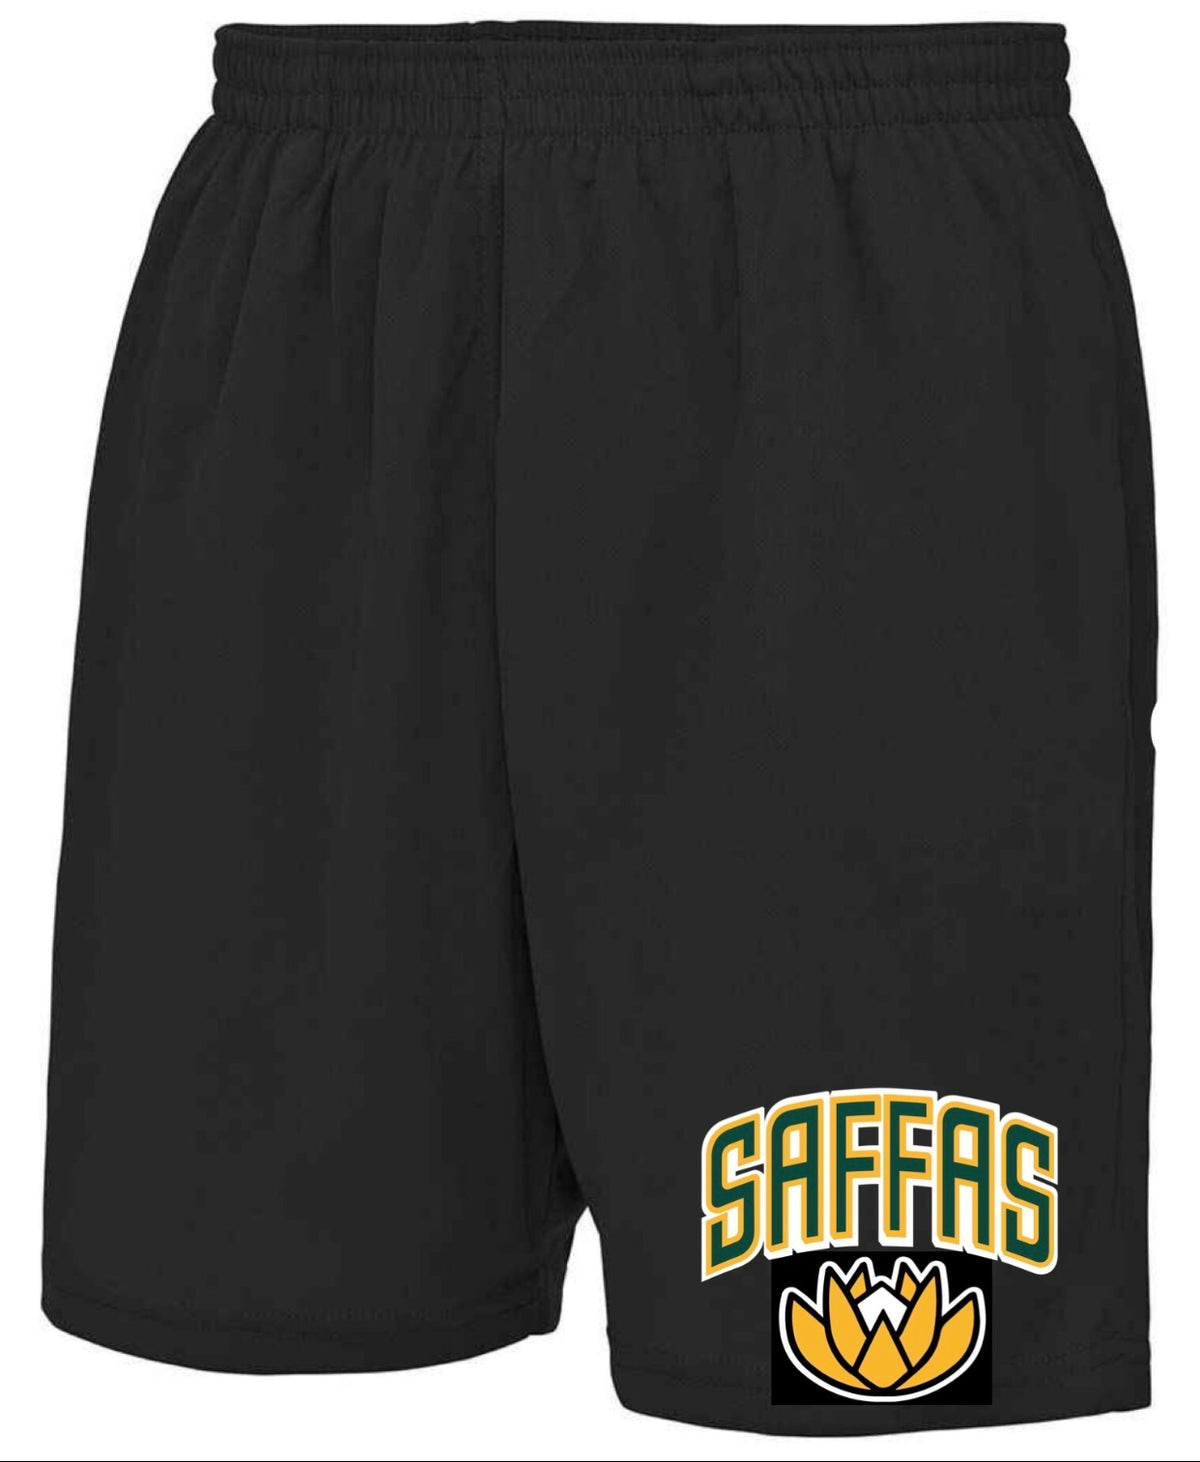 Saffas shorts